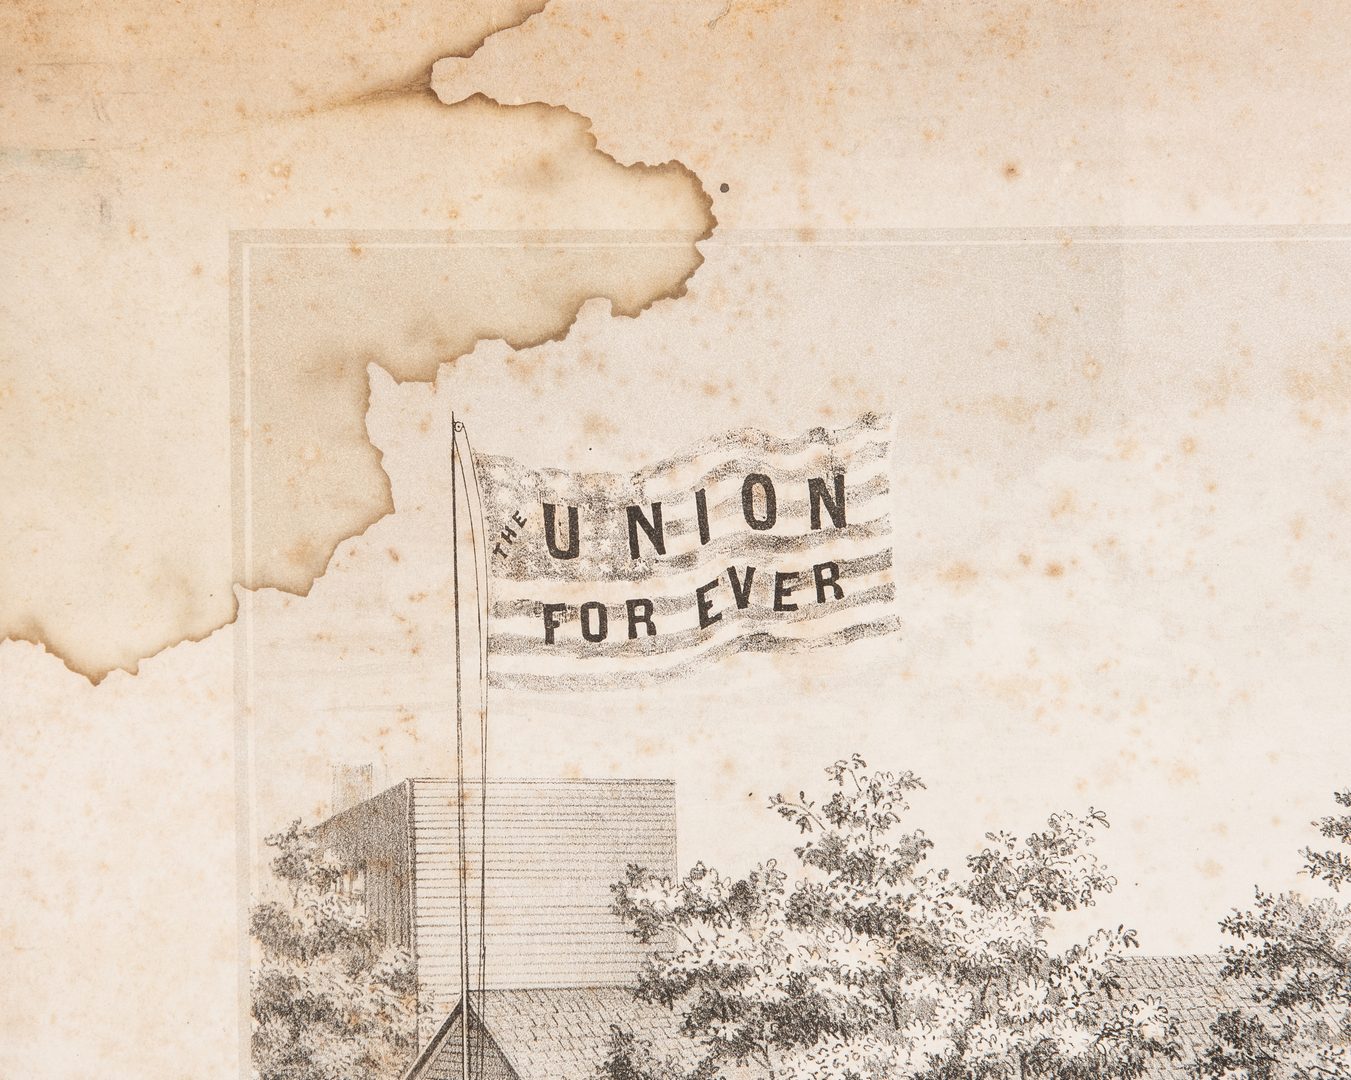 Lot 177: 5 Civil War Prints, incl. Southern Prisons by Sachse